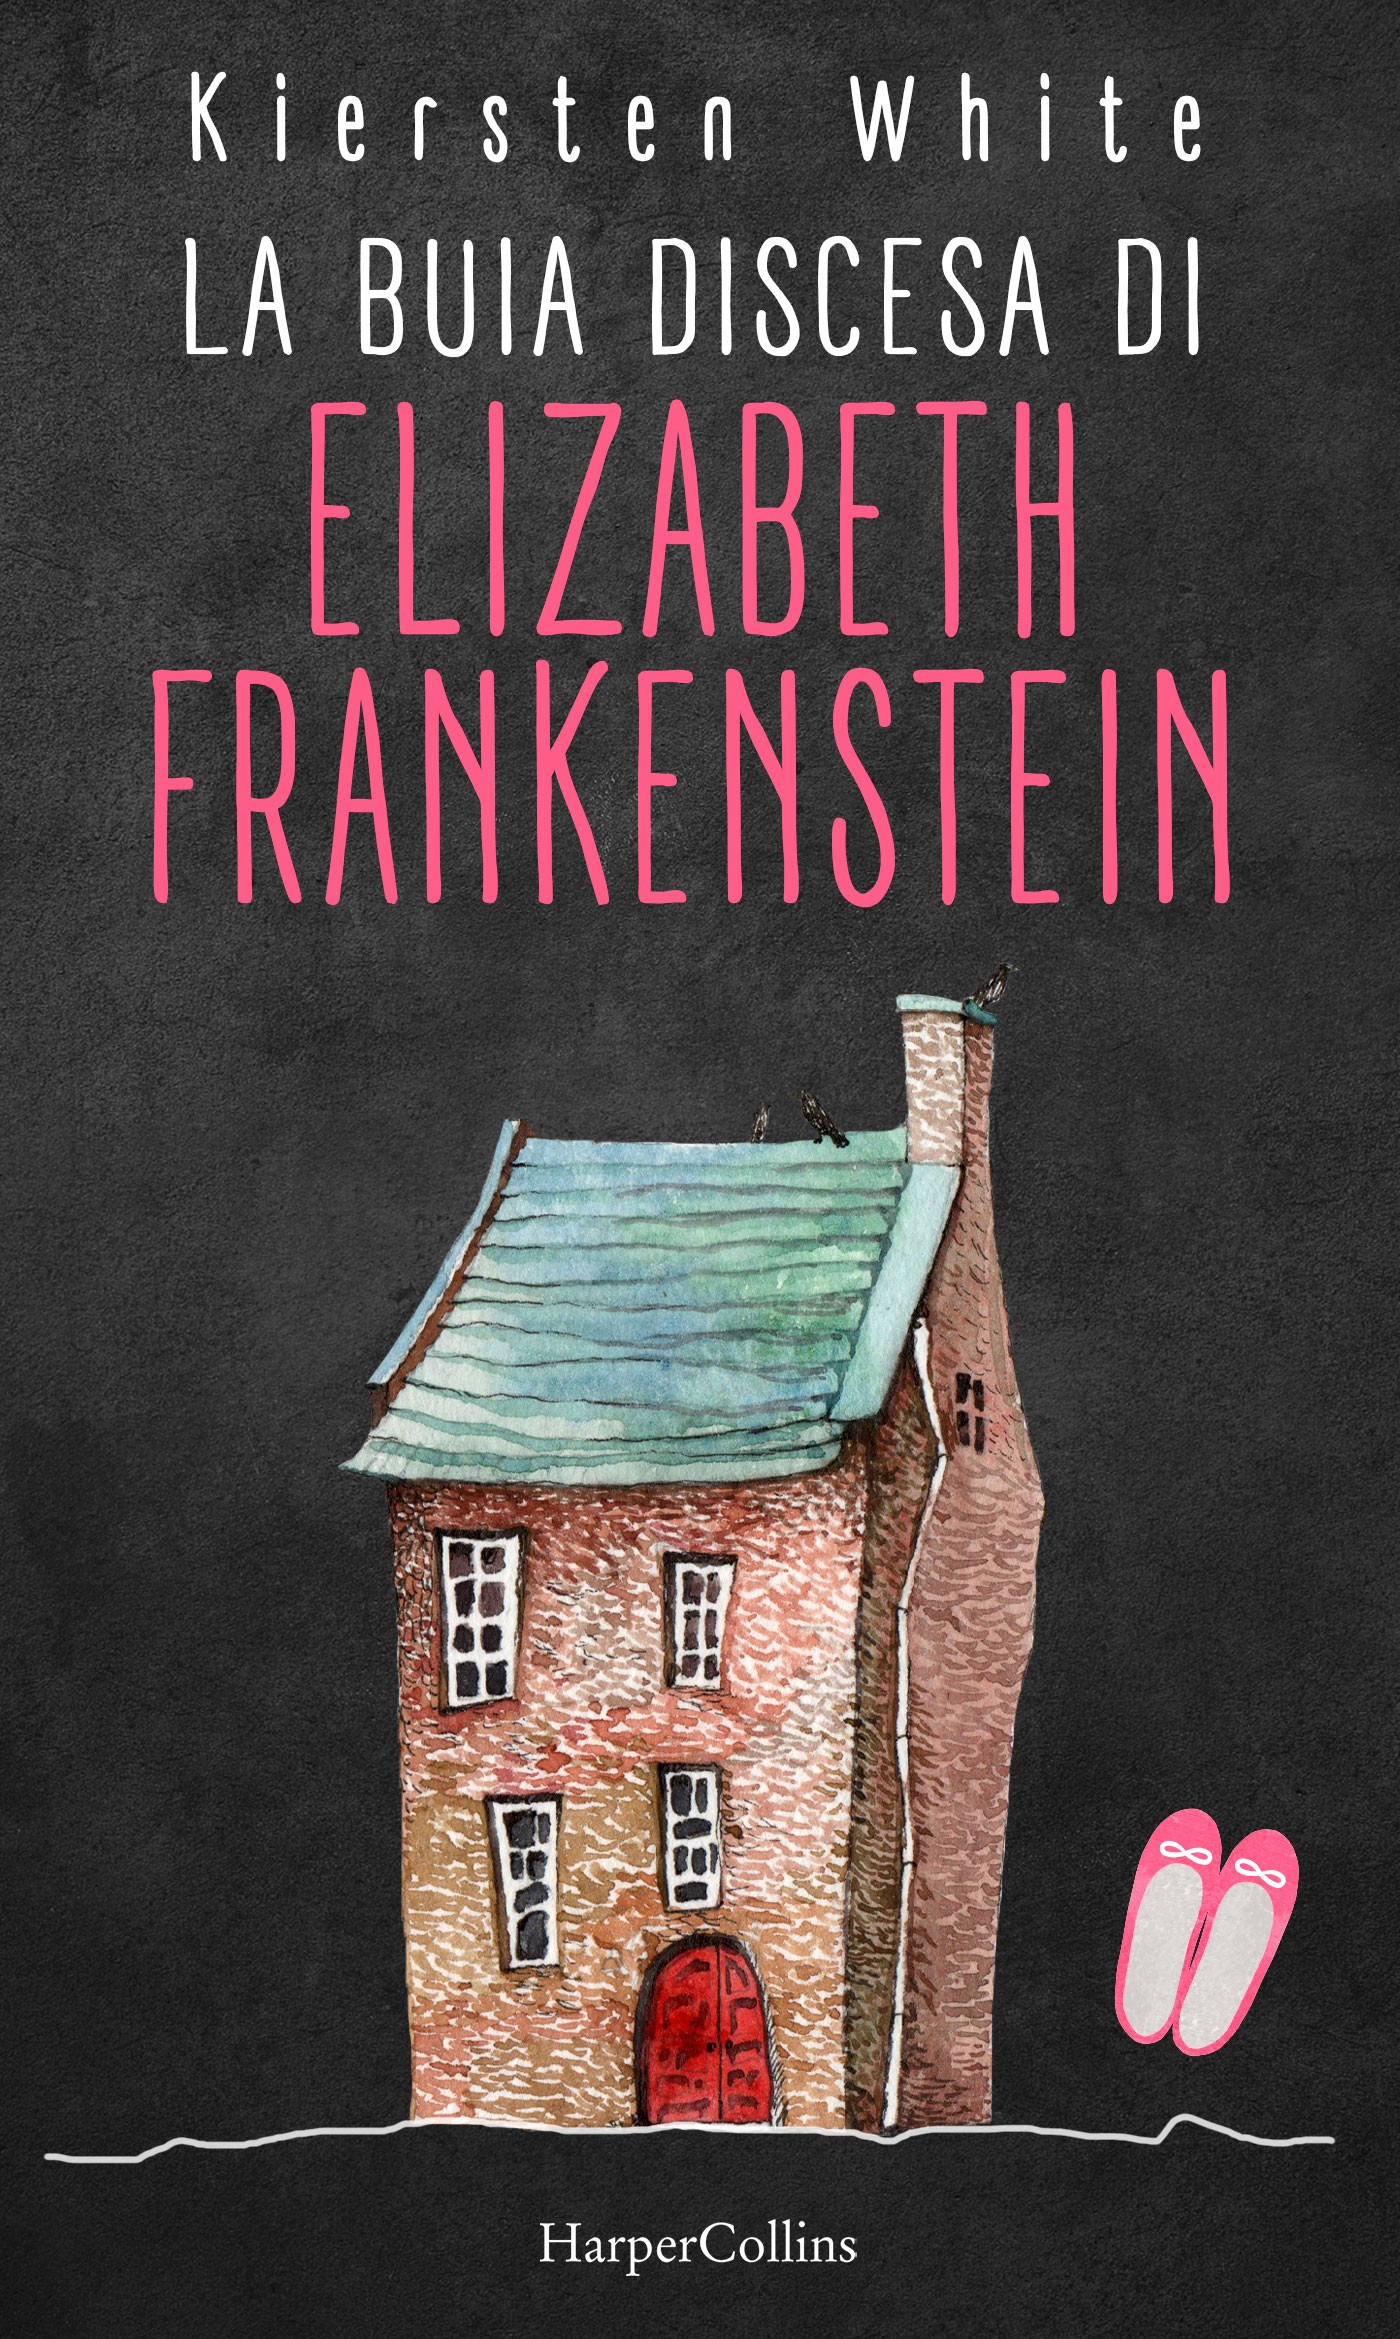 Risultati immagini per La buia discesa di Elizabeth Frankenstein" di Kiersten White